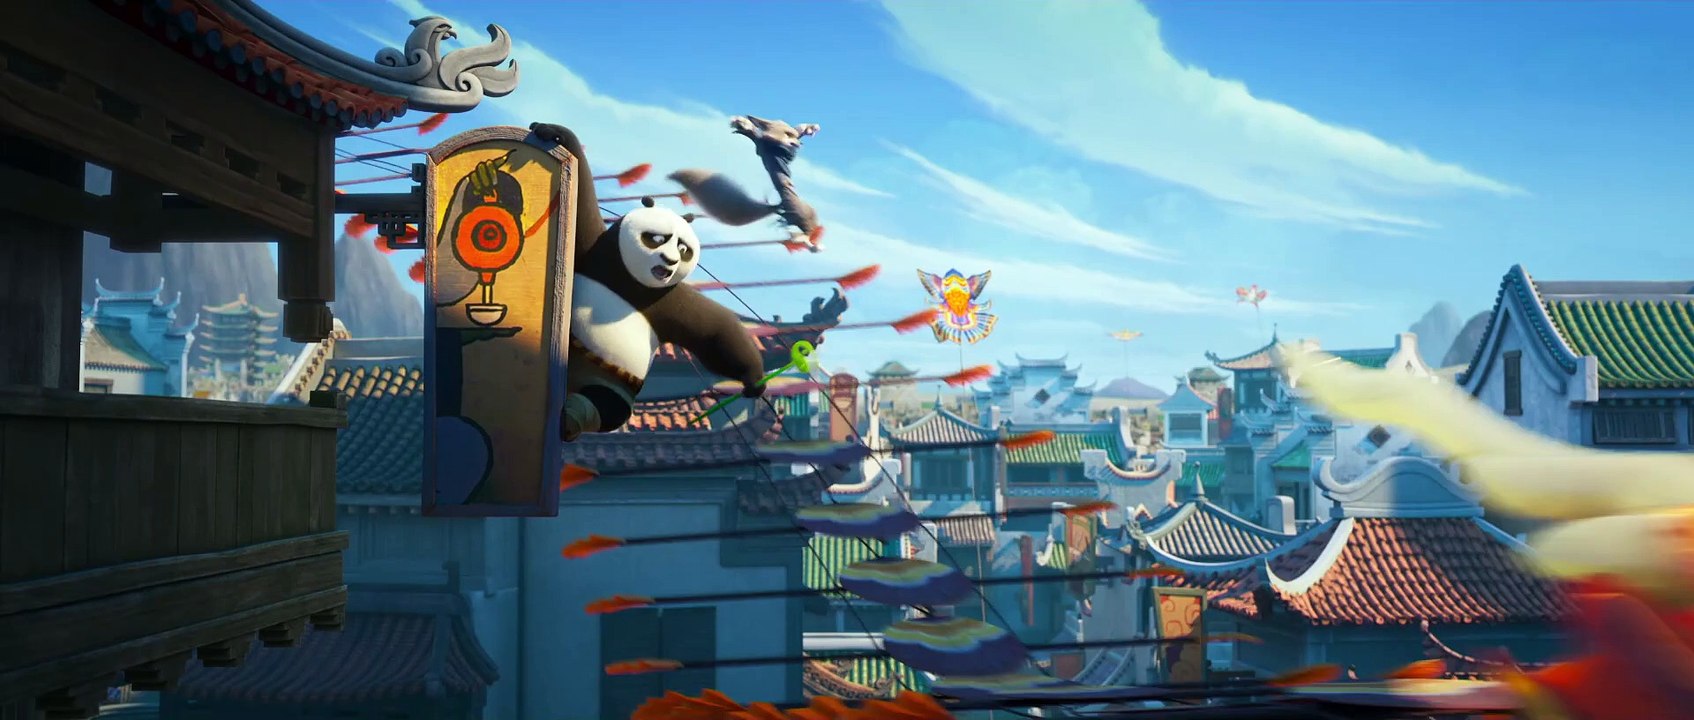 Kung Fu Panda 4 - Trailer (Deutsch) HD